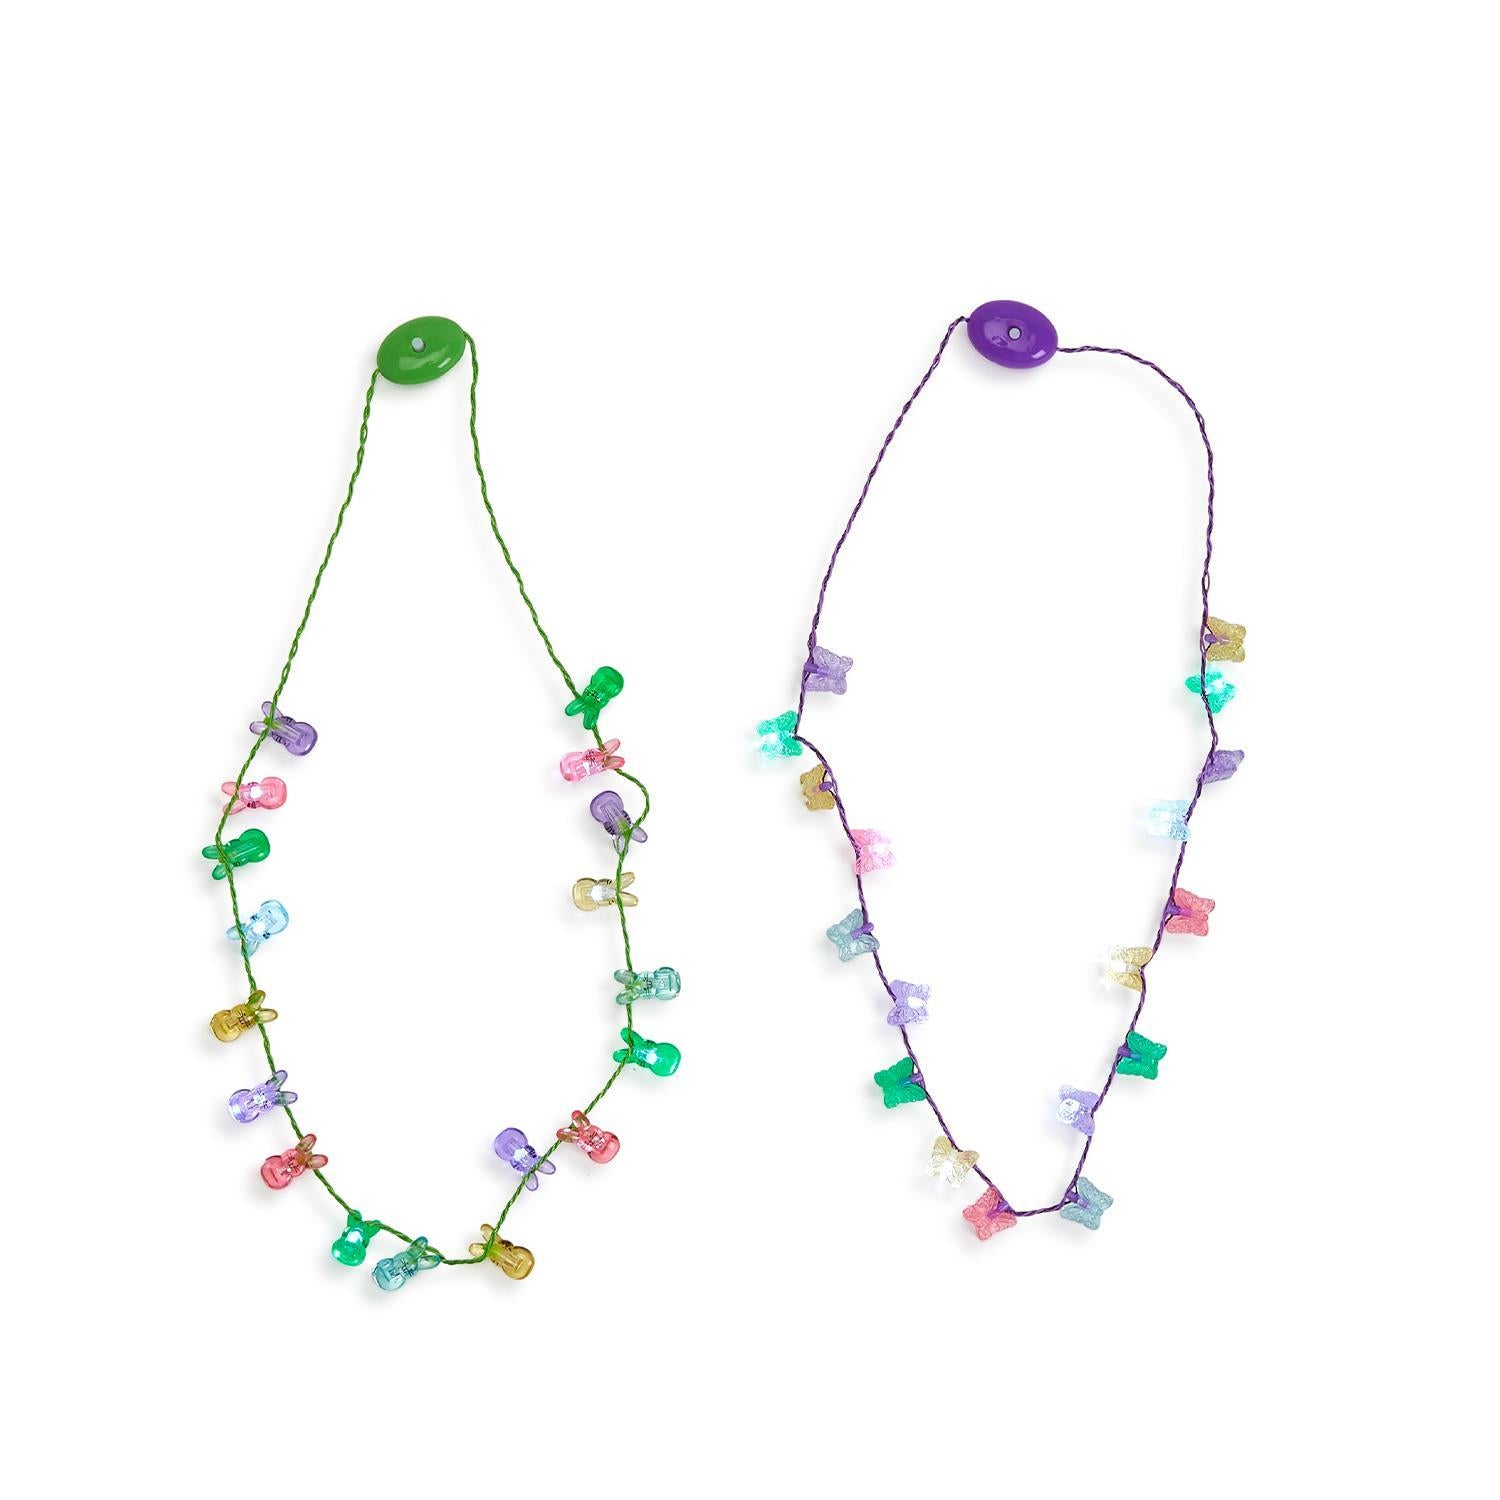 2 LED Light Up Christmas Bulb Necklace Party ideas Jewelry Necklace Xmas  Gift | eBay